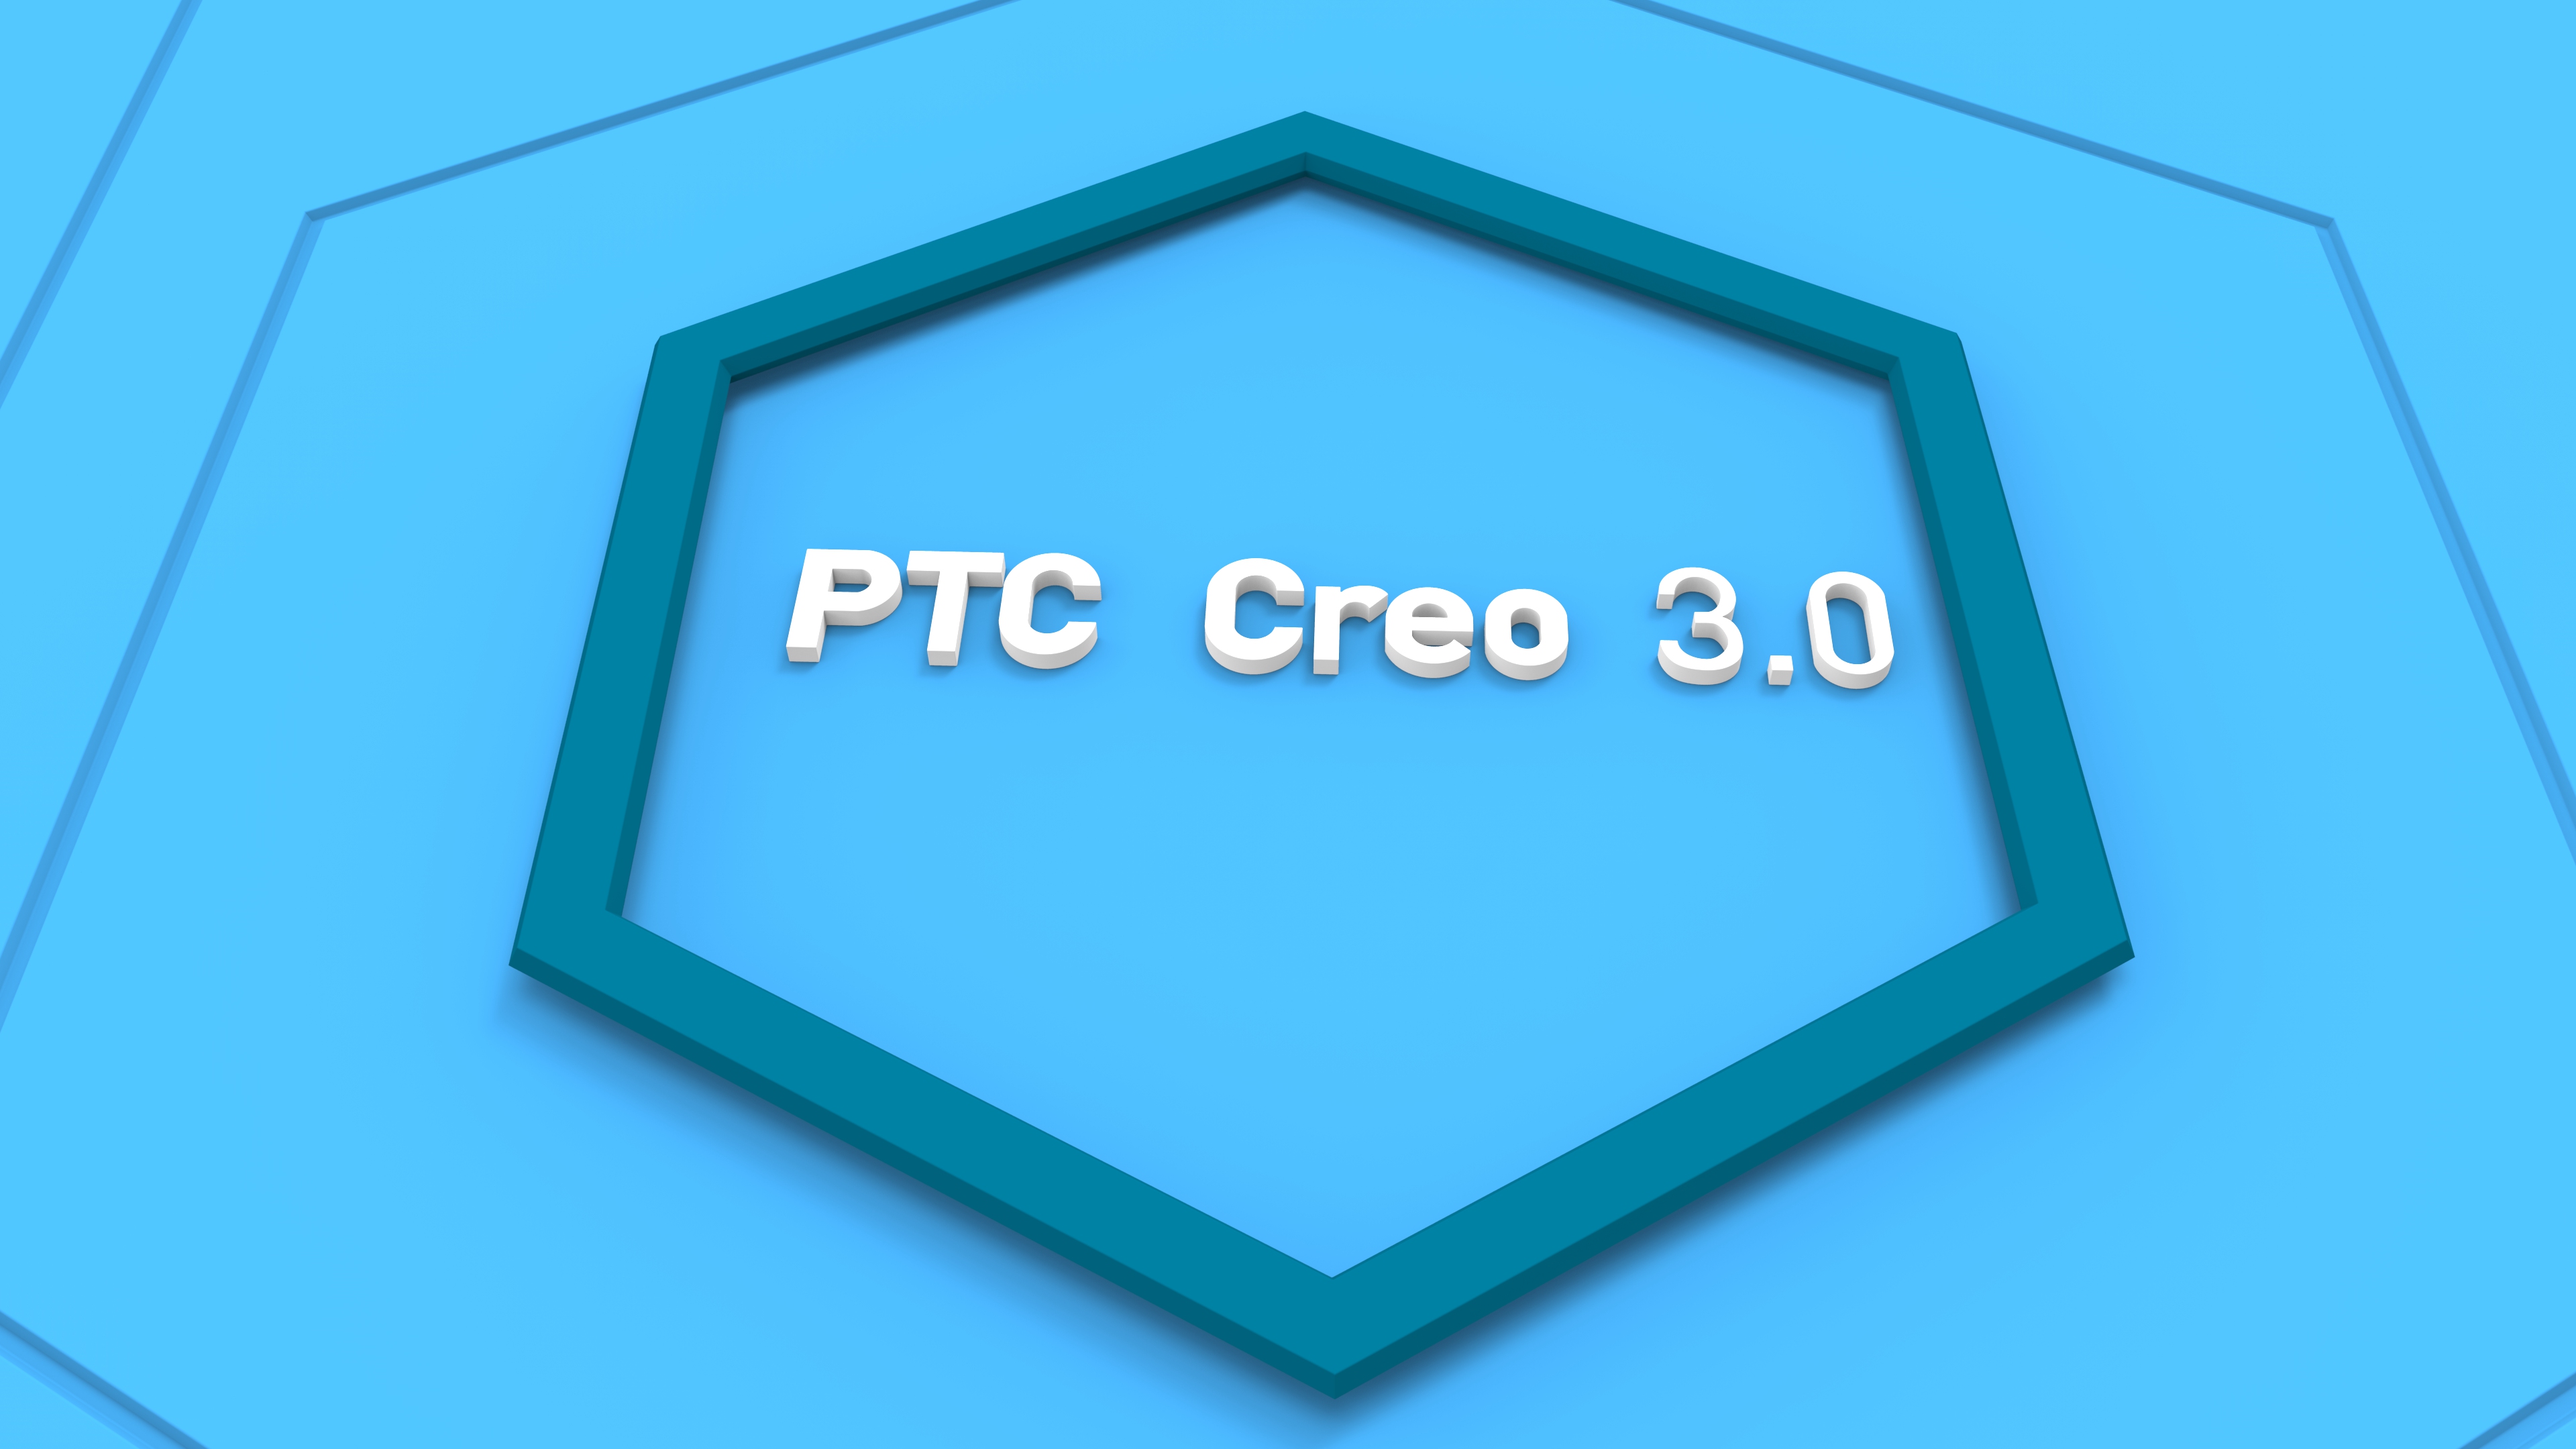 PTC+Creo+3.0+logo.jpg